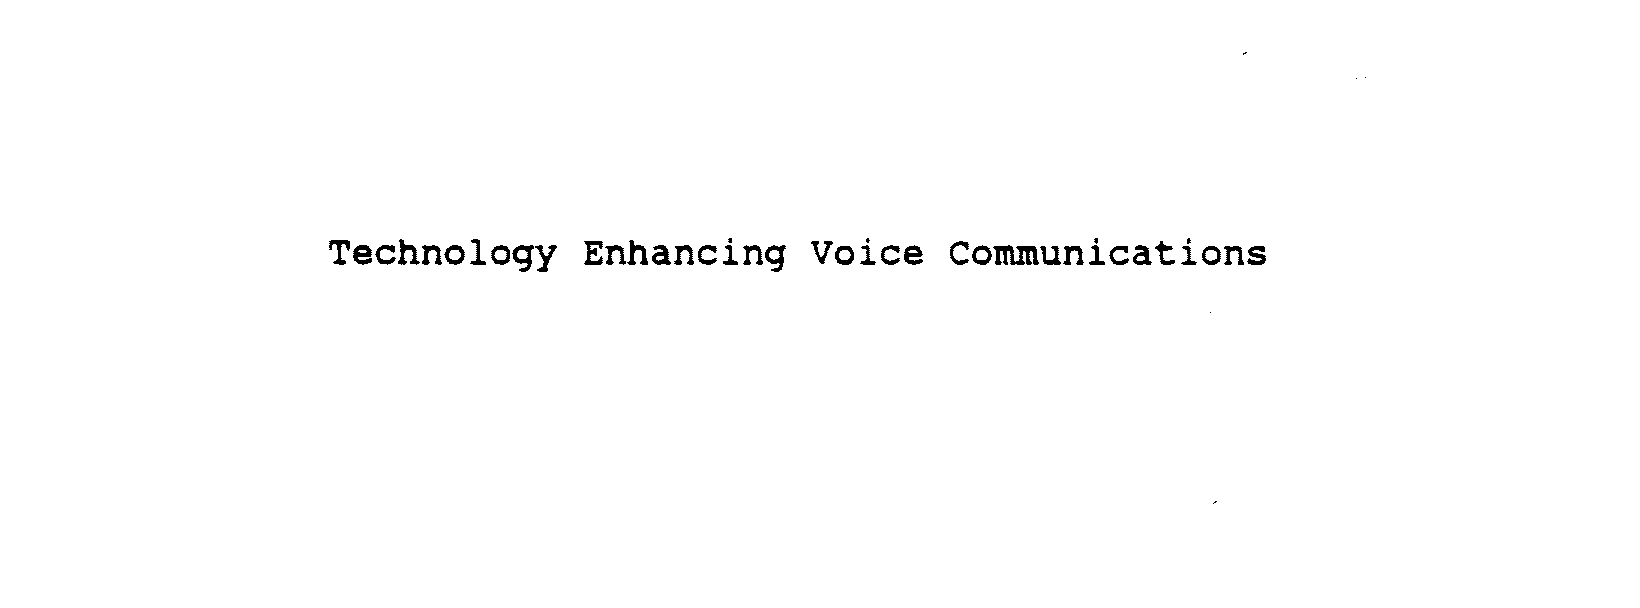  TECHNOLOGY ENHANCING VOICE COMMUNICATIONS